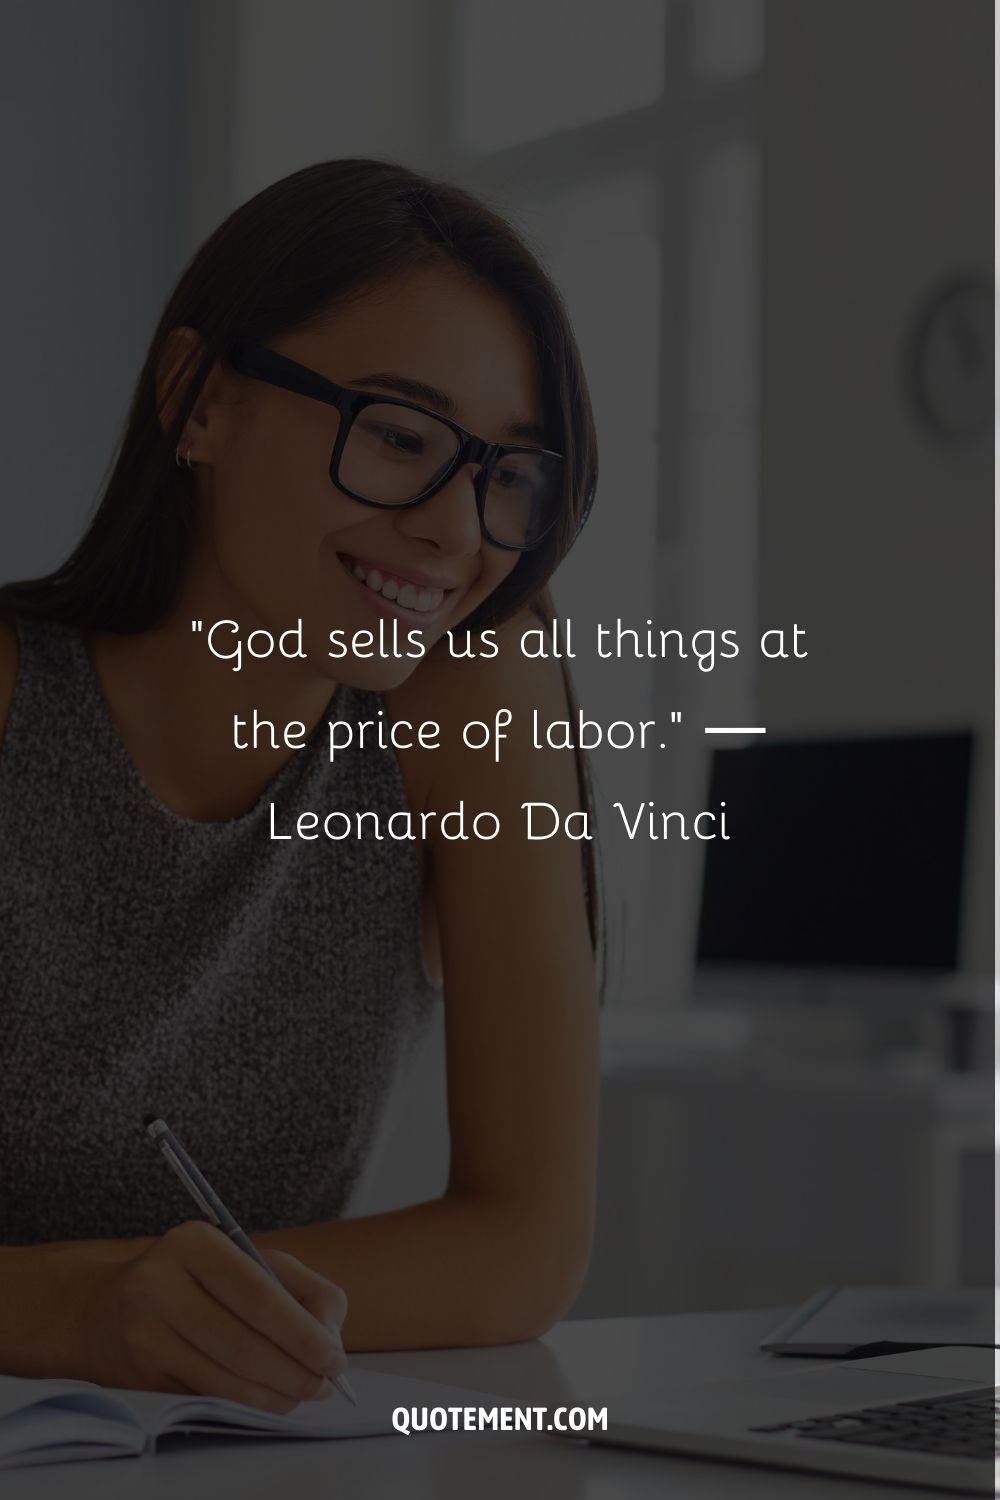 “God sells us all things at the price of labor.” ― Leonardo Da Vinci